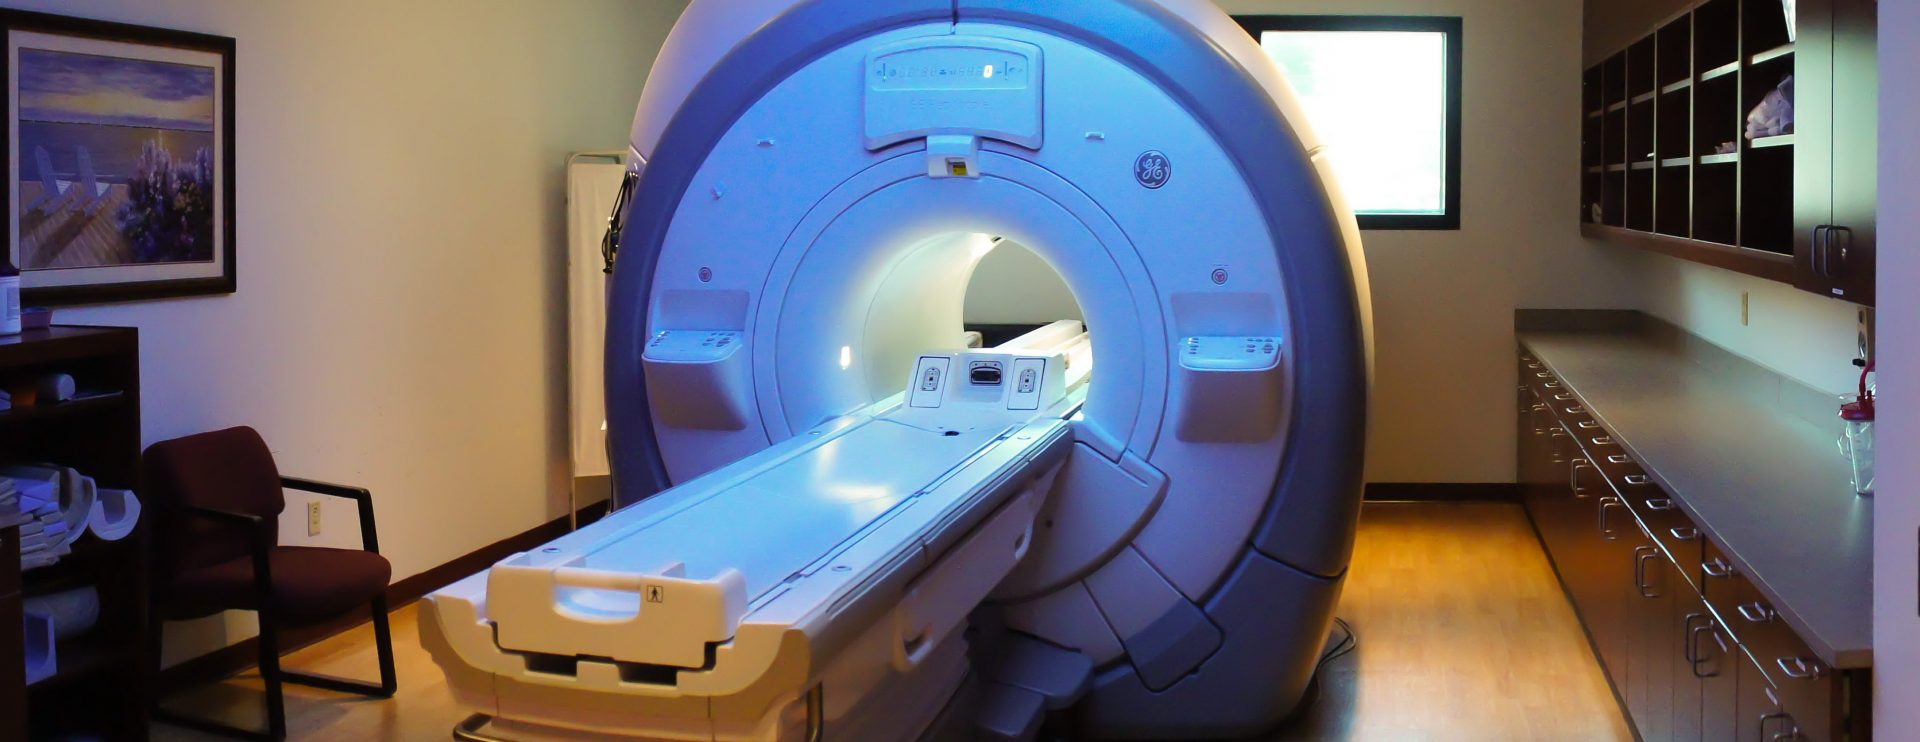 GWIC Will Soon be Offering Cardiac MRI